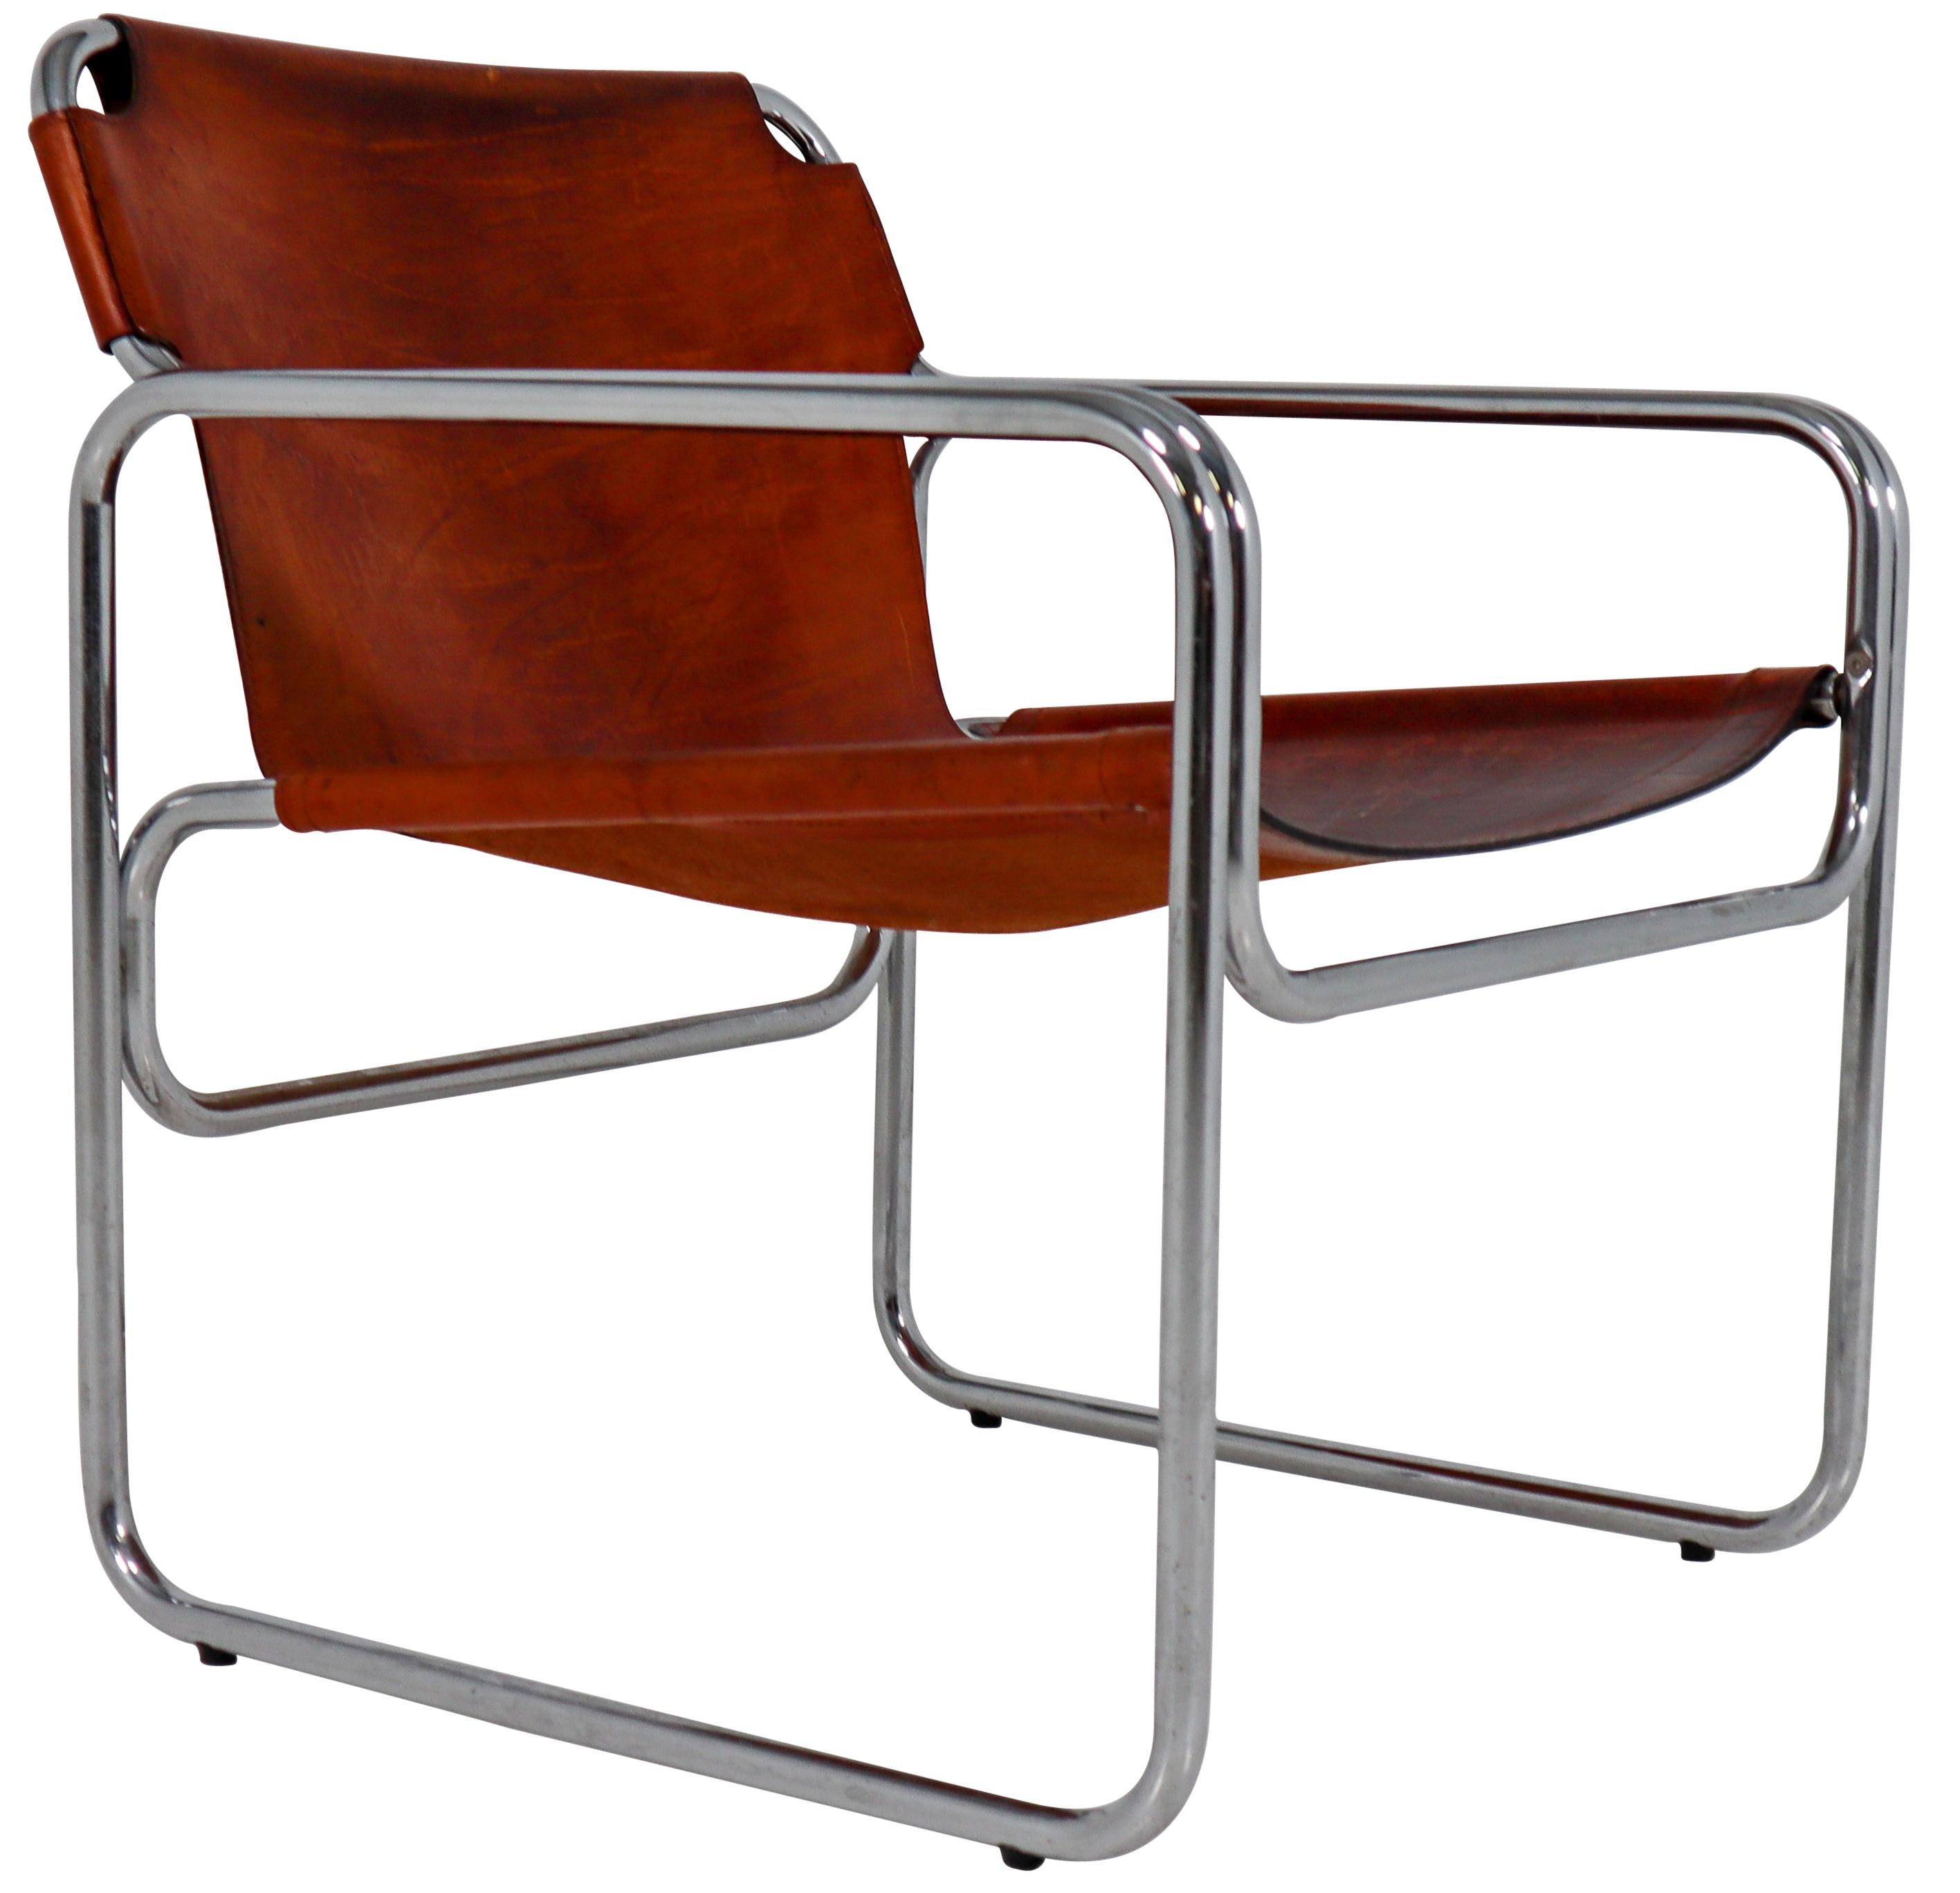 1960 Bauhaus-Style Tubelar Chair in Saddle Leather